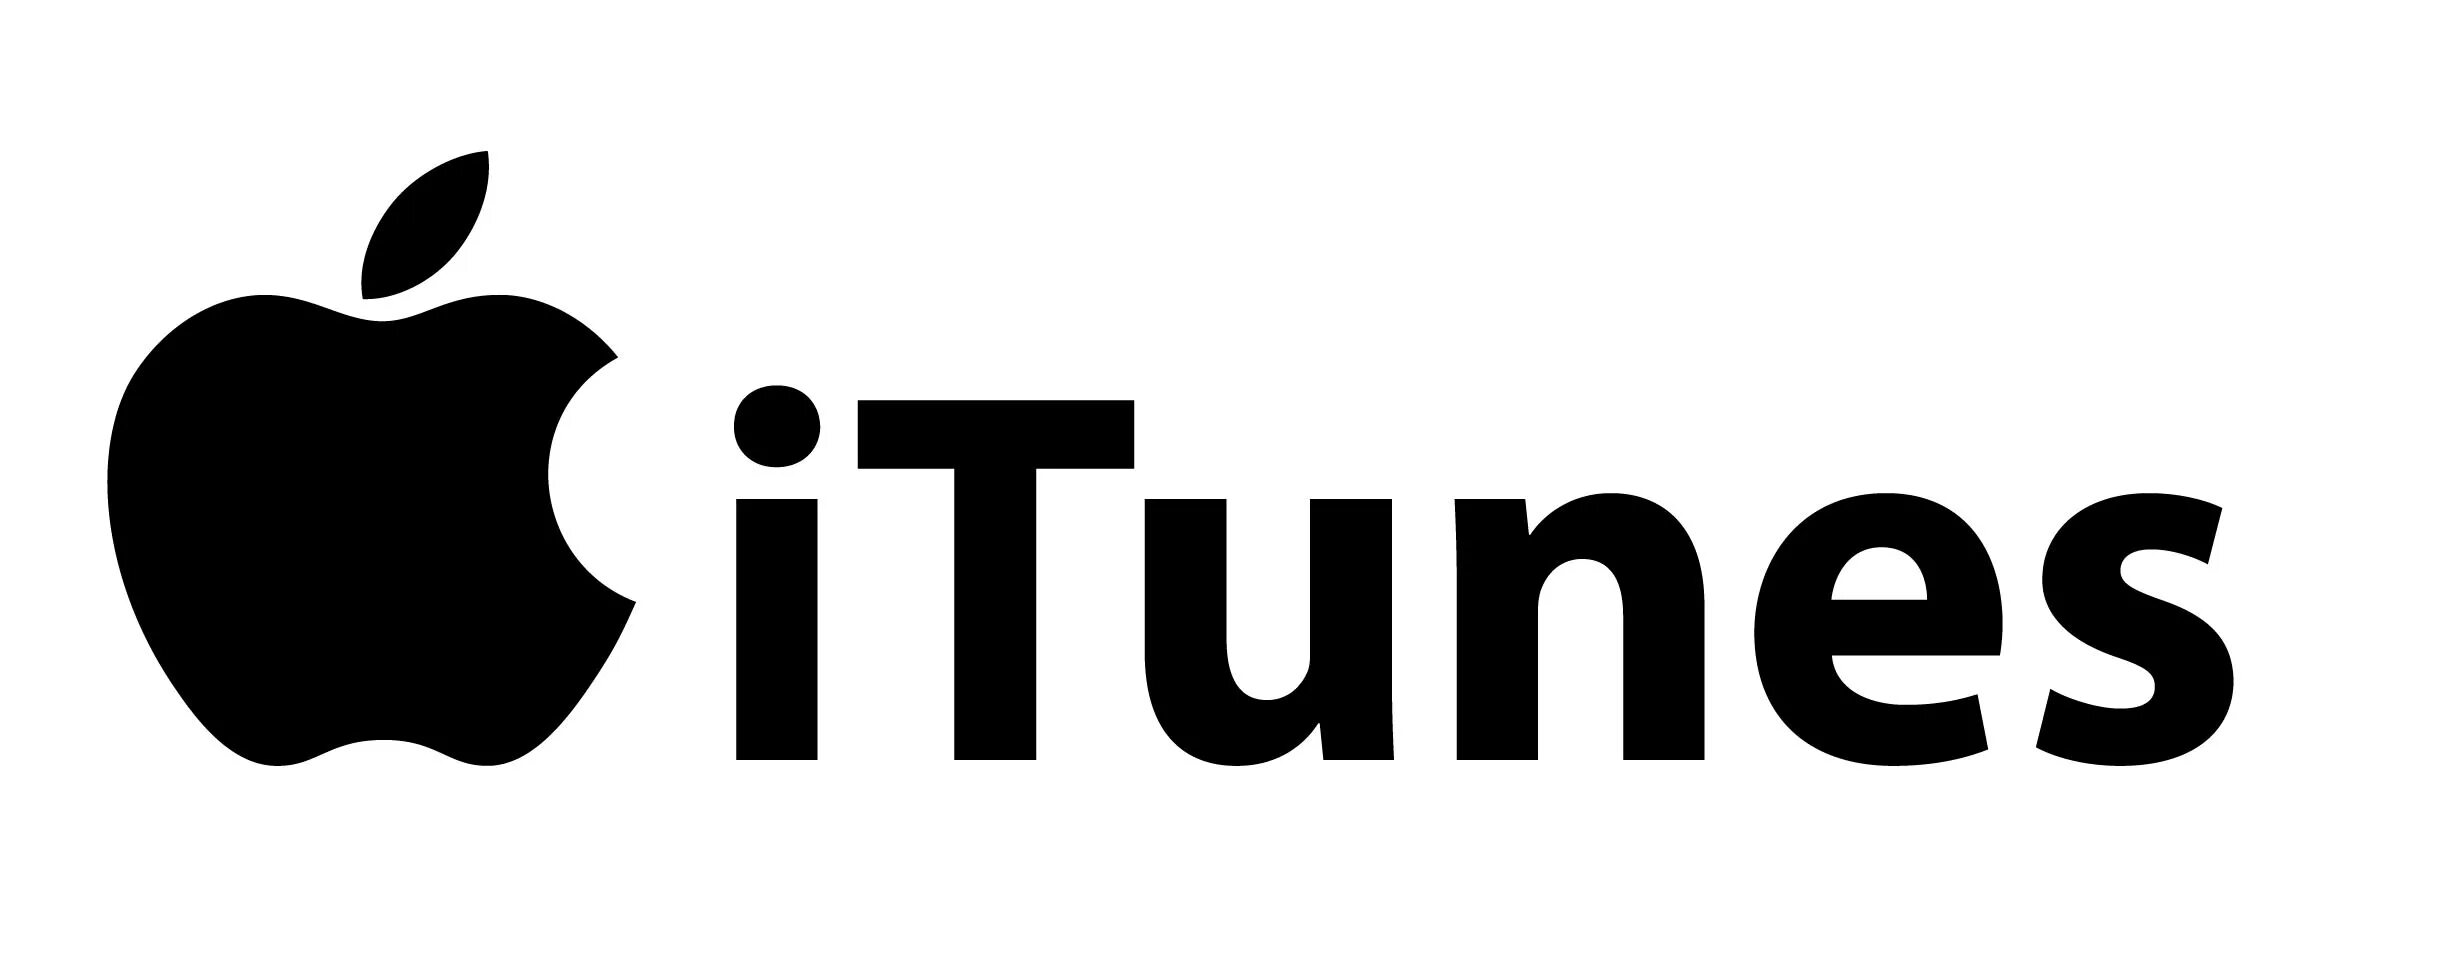 J tunes. ITUNES. Айтюнс лого. ITUNES PNG. Музыкальный логотип.